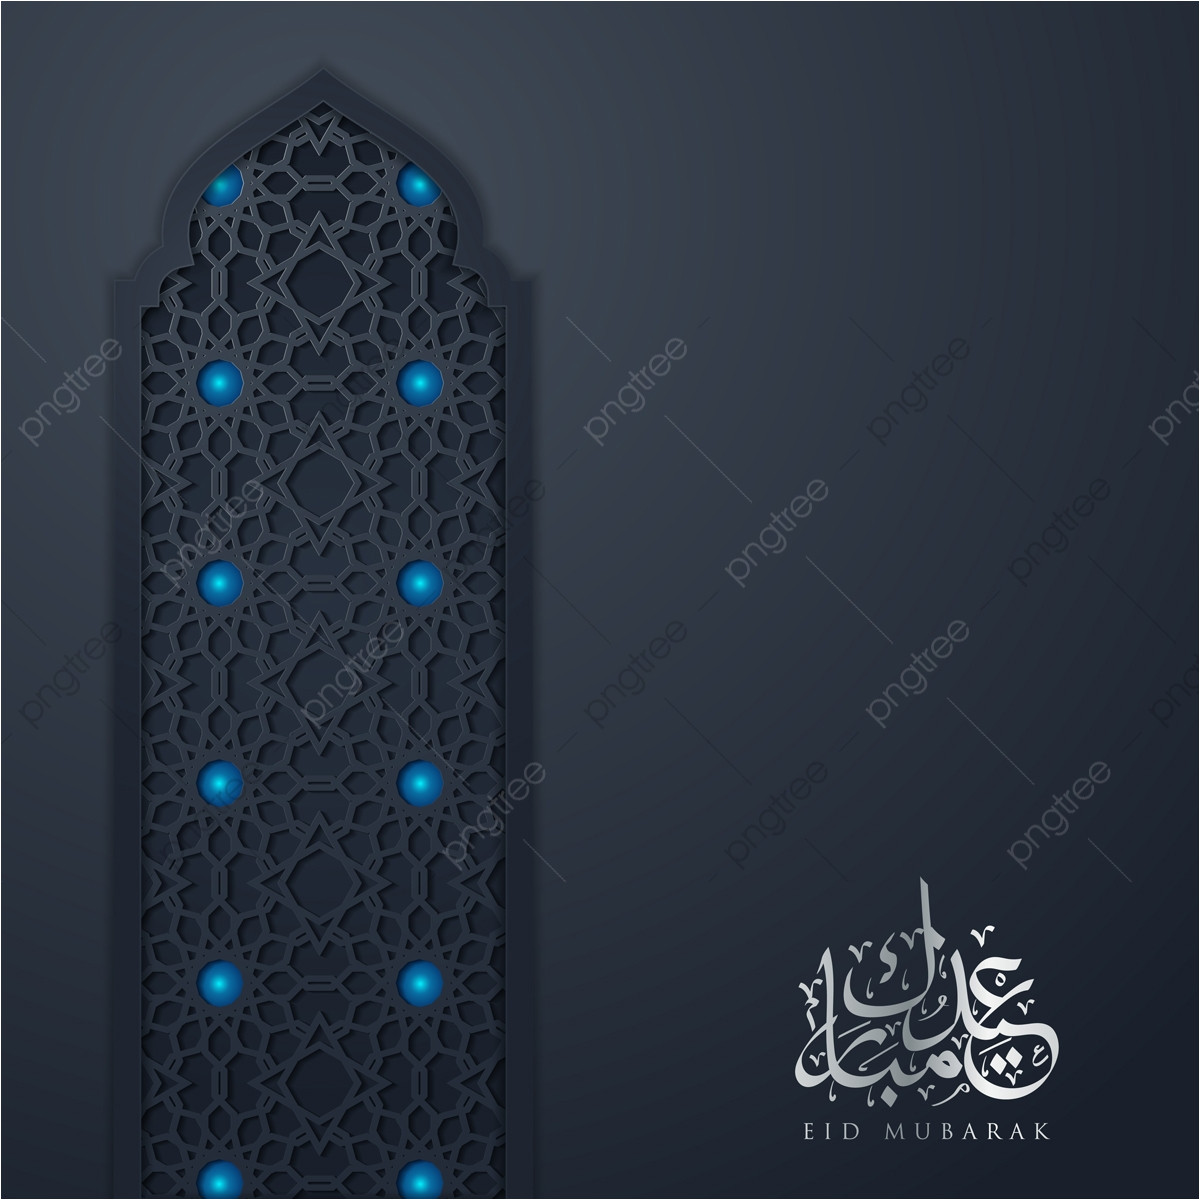 pngtree eid mubarak greeting card template islamic vector design with geomteric pattern png image 4199804 jpg